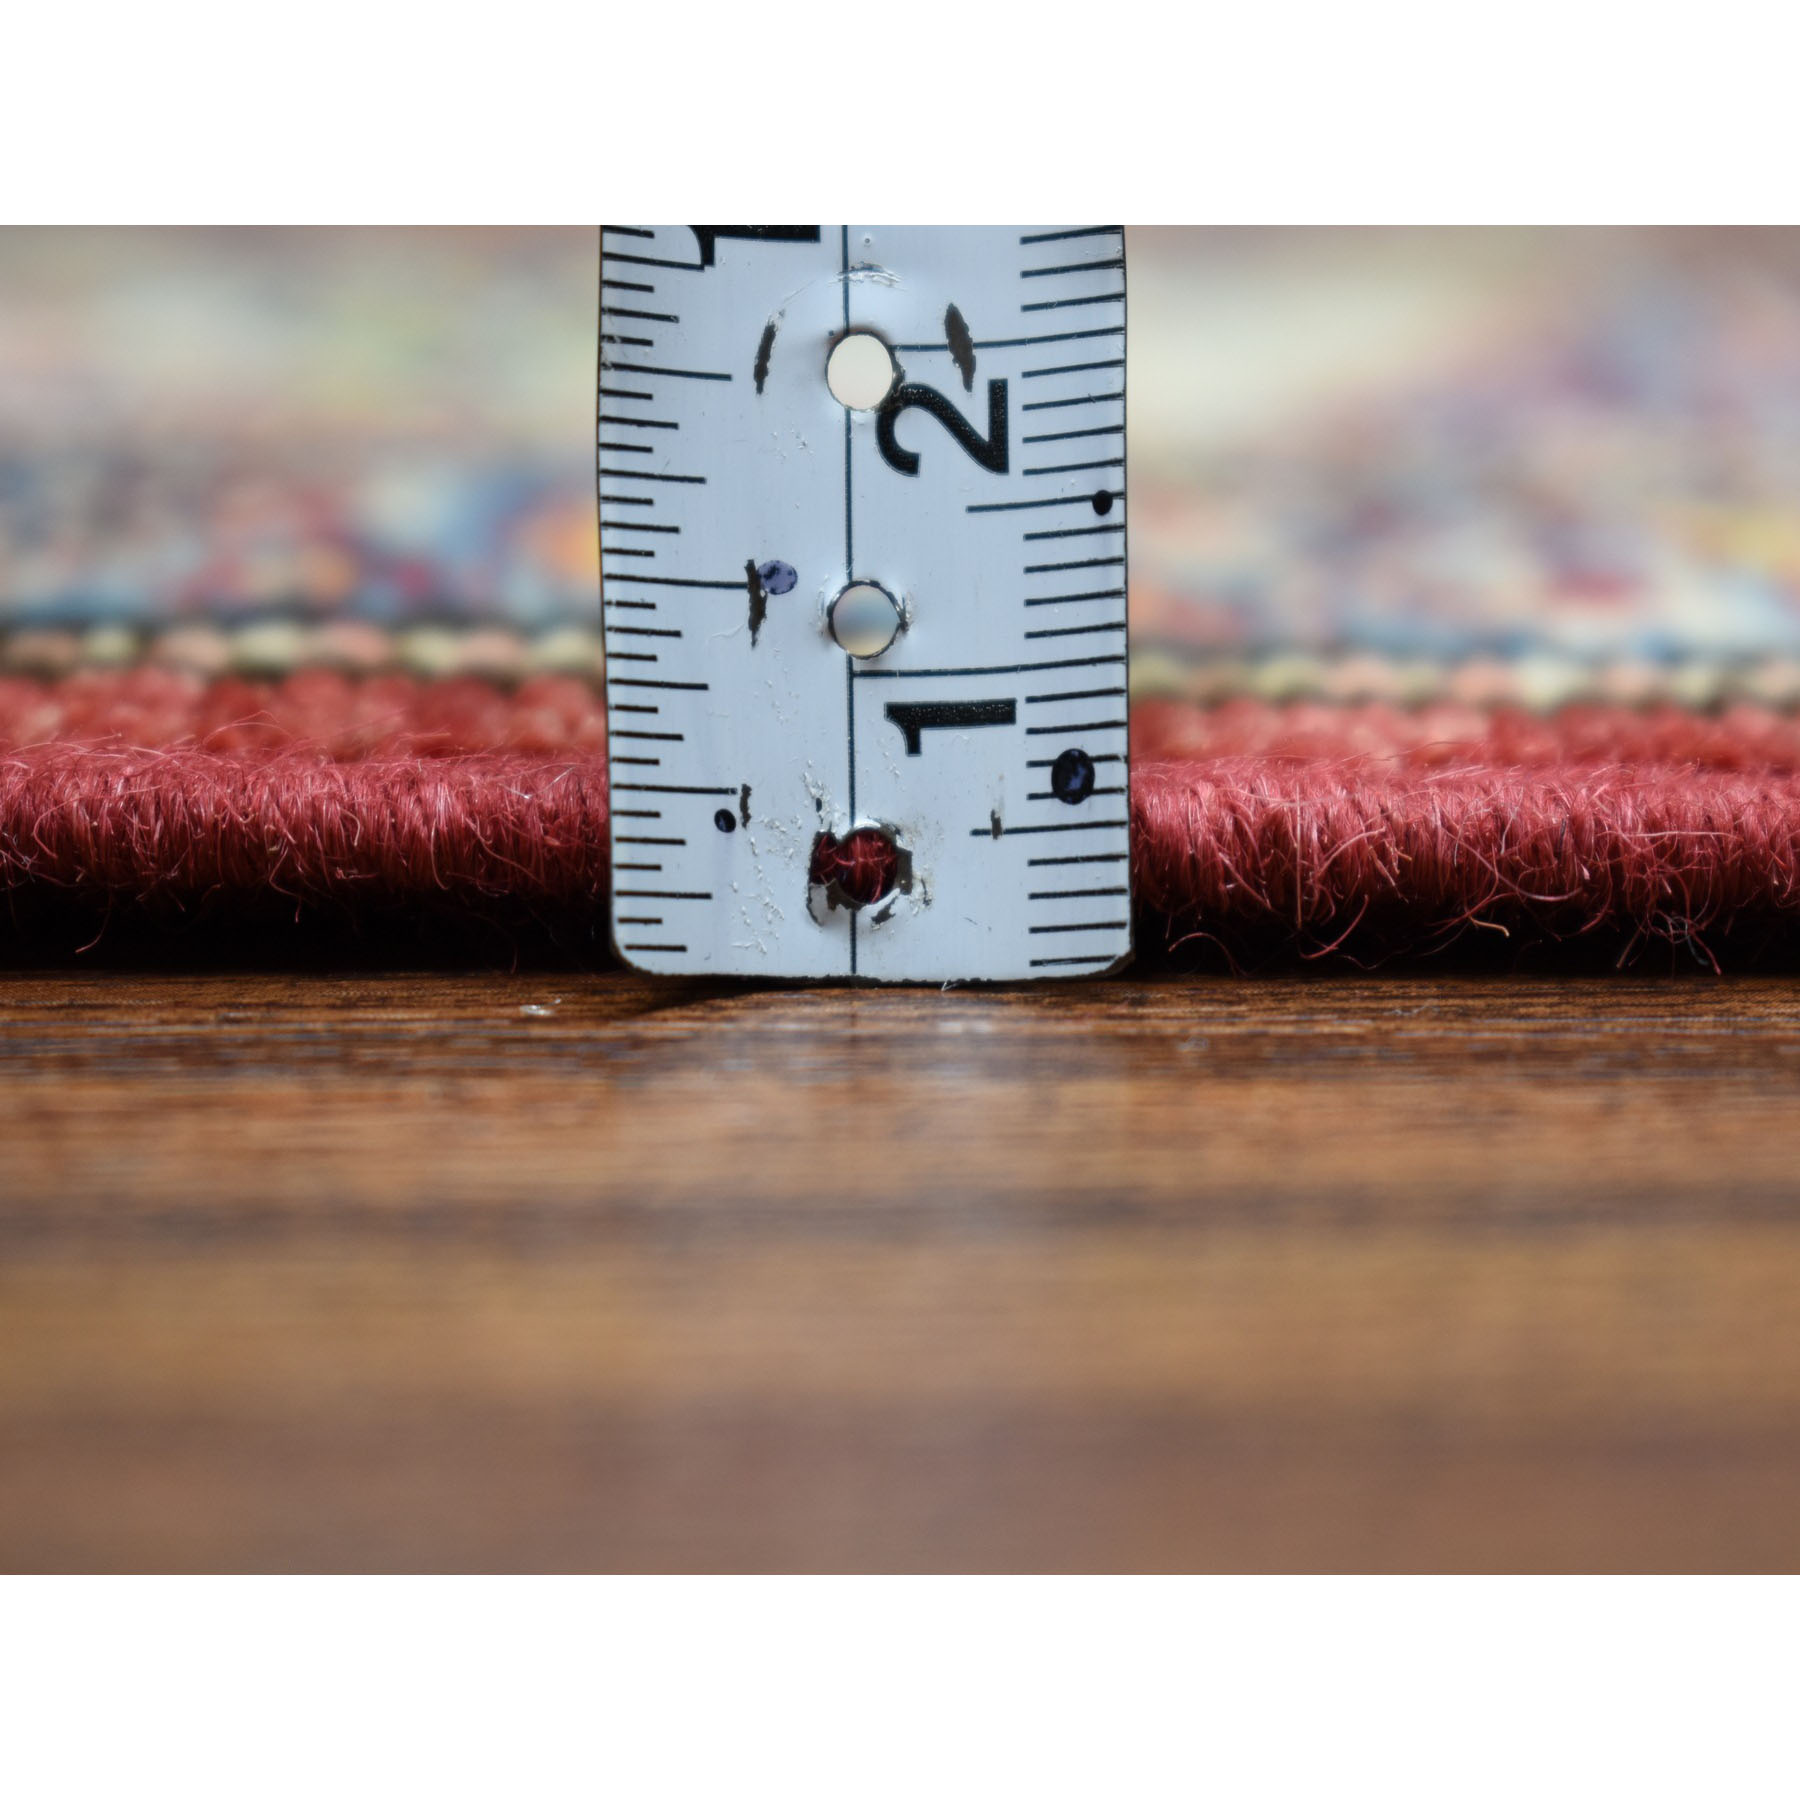 2-6 x19-8  Red Super Kazak Pure Wool Geometric Design Hand-Knotted XL Runner Oriental Rug 